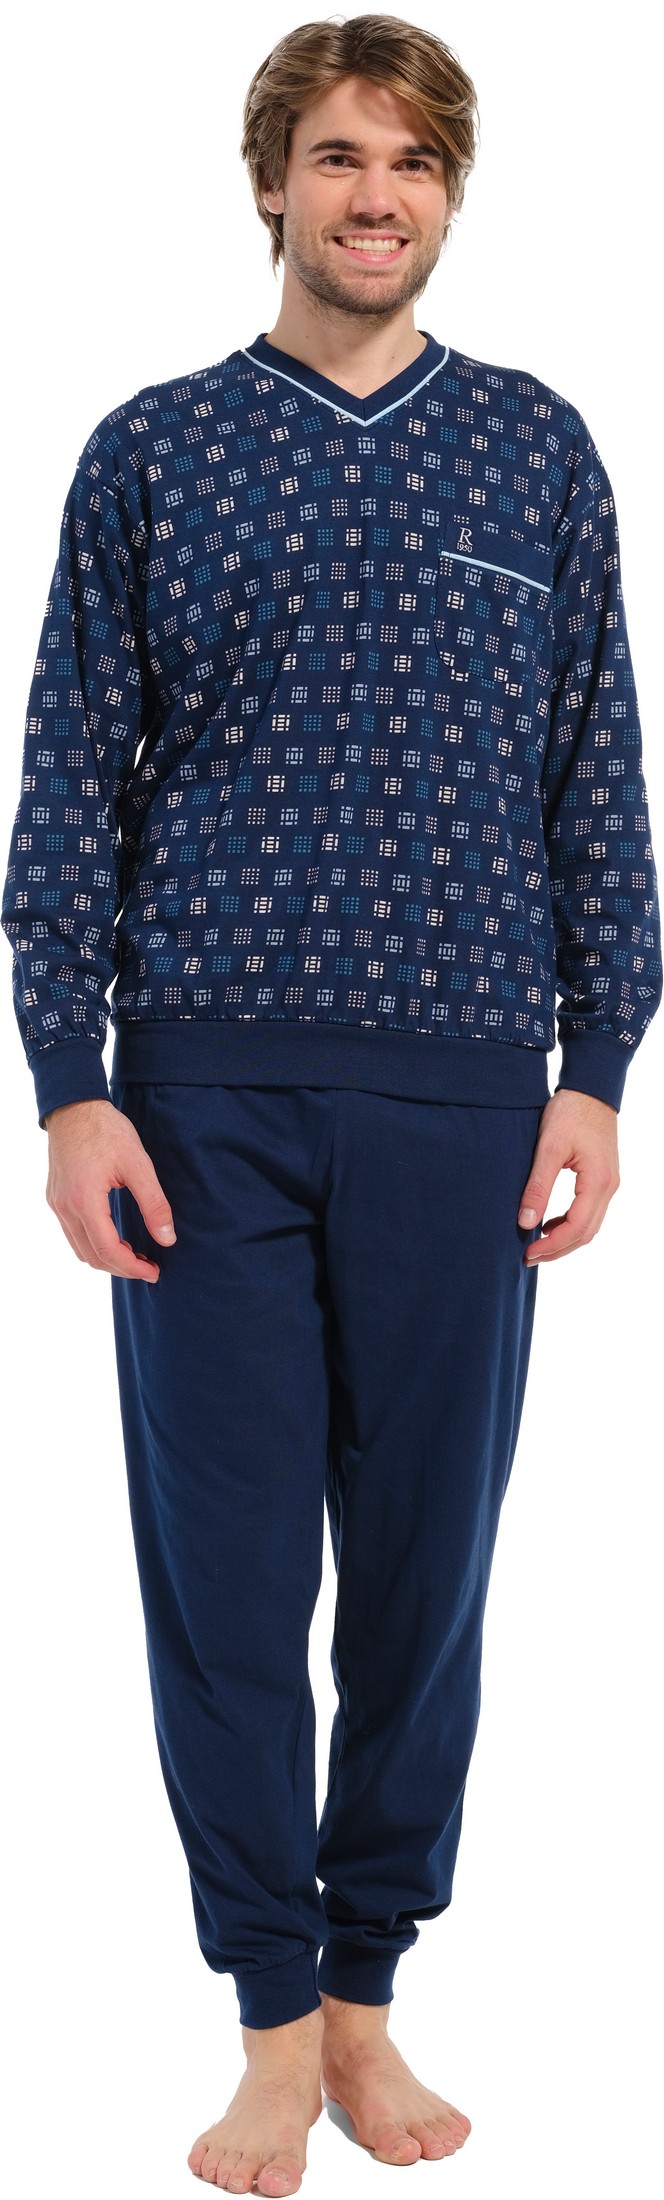 Robson tricot heren pyjama 27232-716-2 - Blauw - 3XL/58